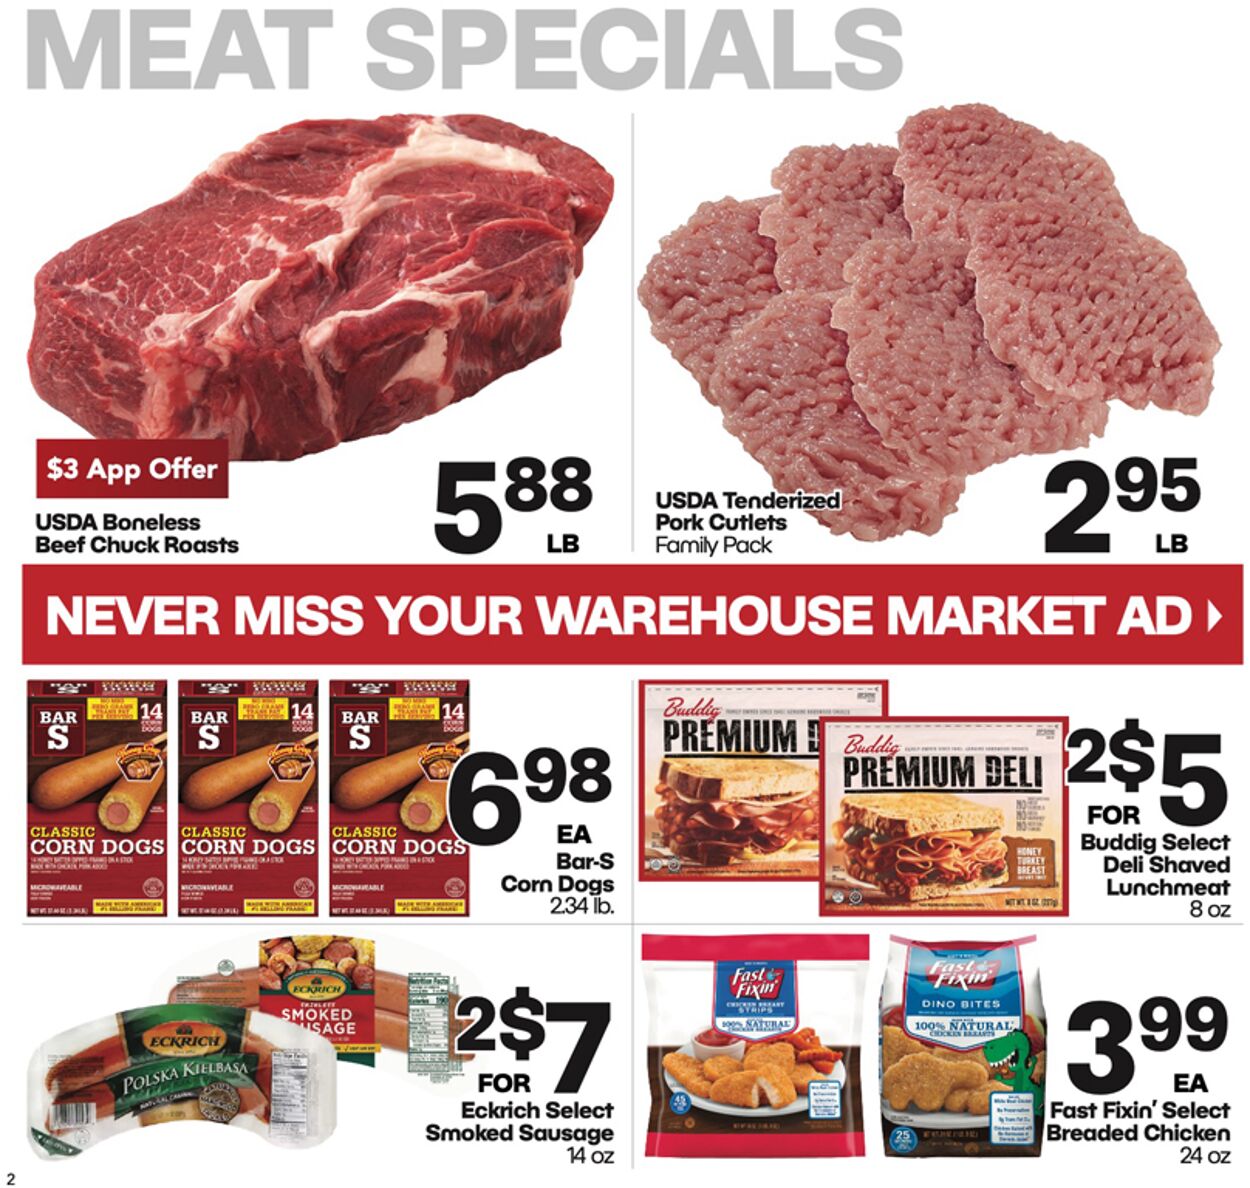 Weekly ad Warehouse Market 06/05/2024 - 06/11/2024